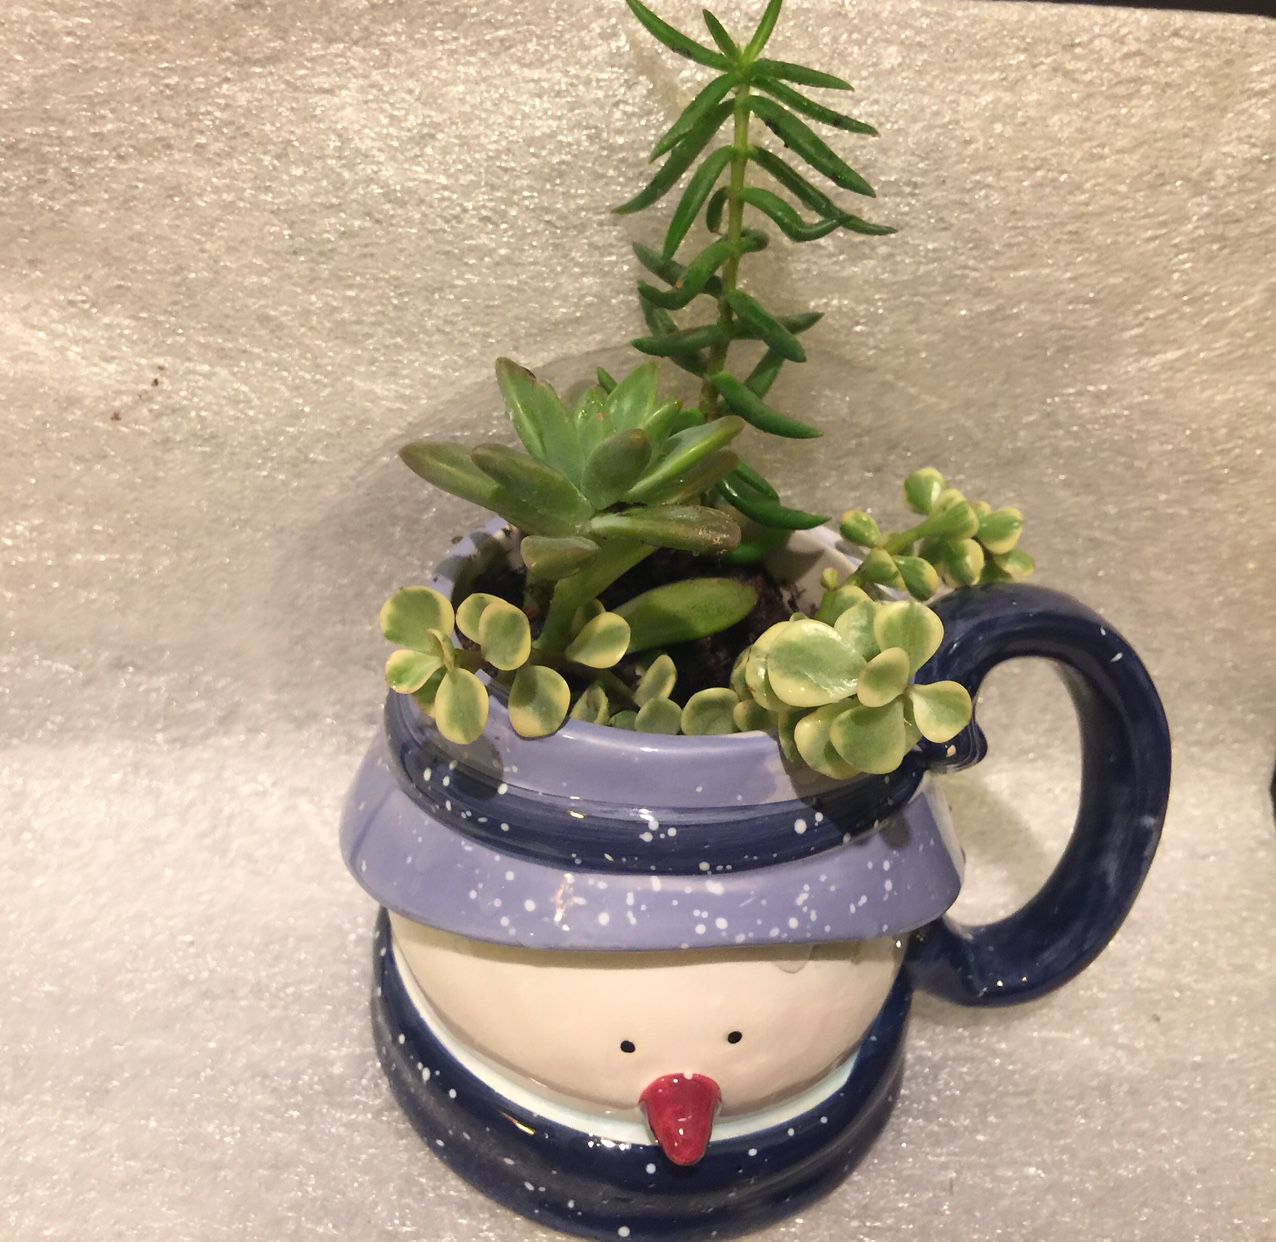 Mrs. Snowman Ceramic Cup With Succulents Plants 🎄⛄️